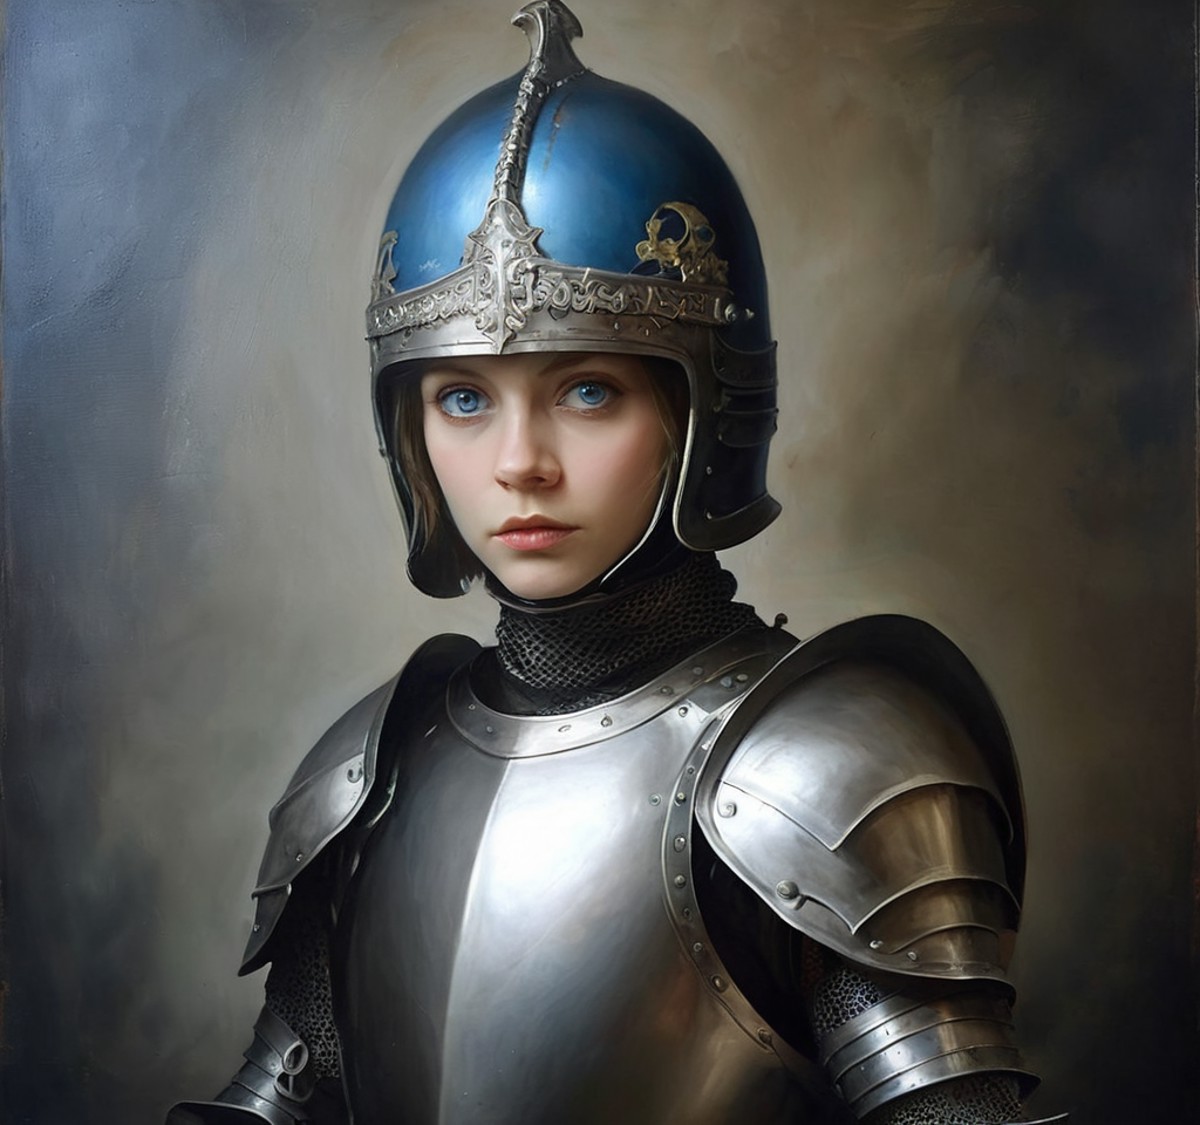 Alisa Selezneva short hair big blue eyes, wearing plate armor and a knight's helmet, mysterious, sinister, foggy, dark, ep...